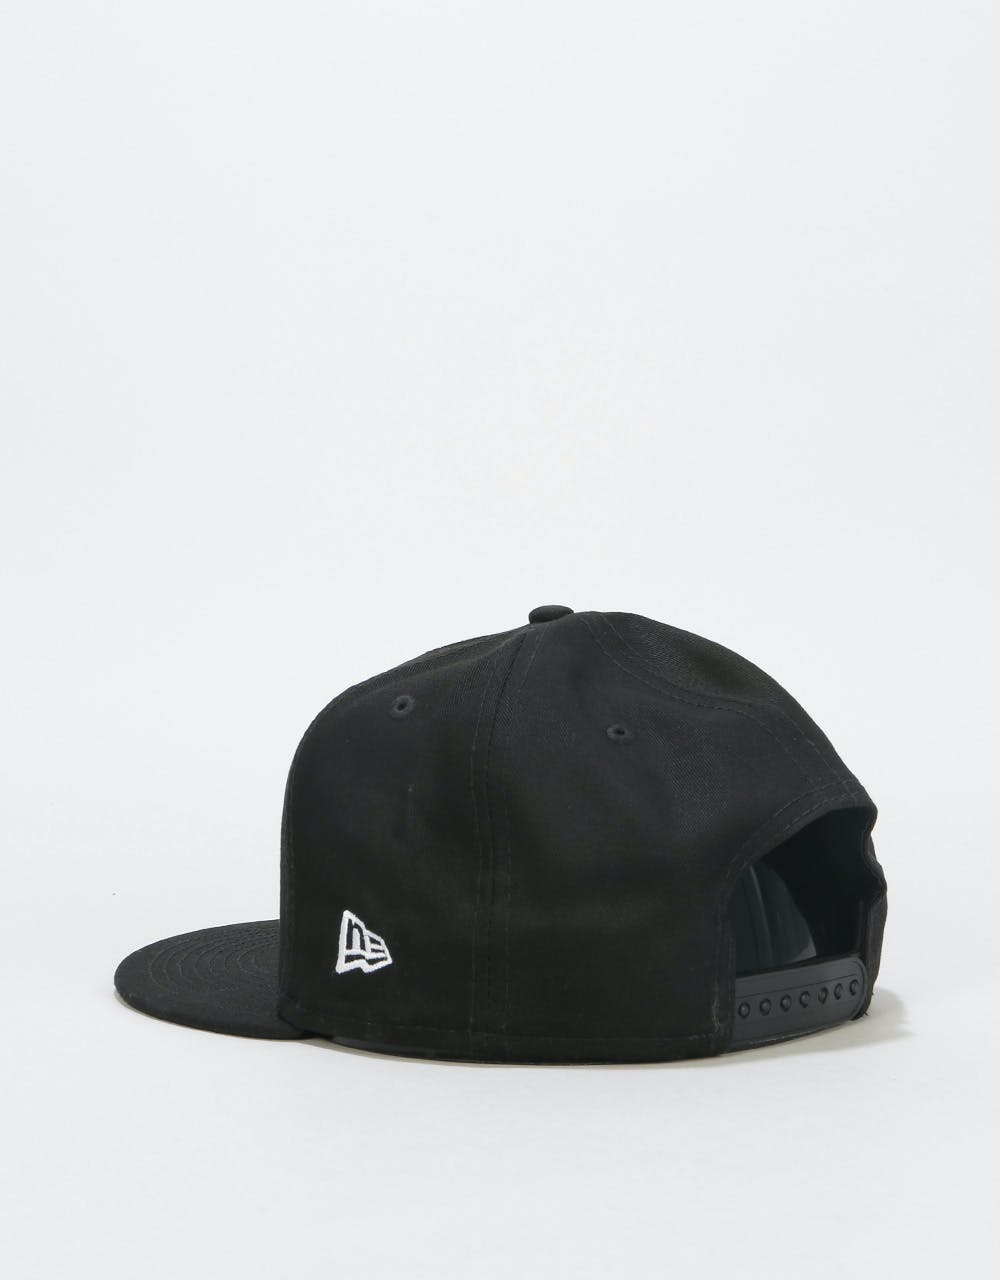 New Era 9Fifty MLB New York Yankees Snapback Cap - Black/White